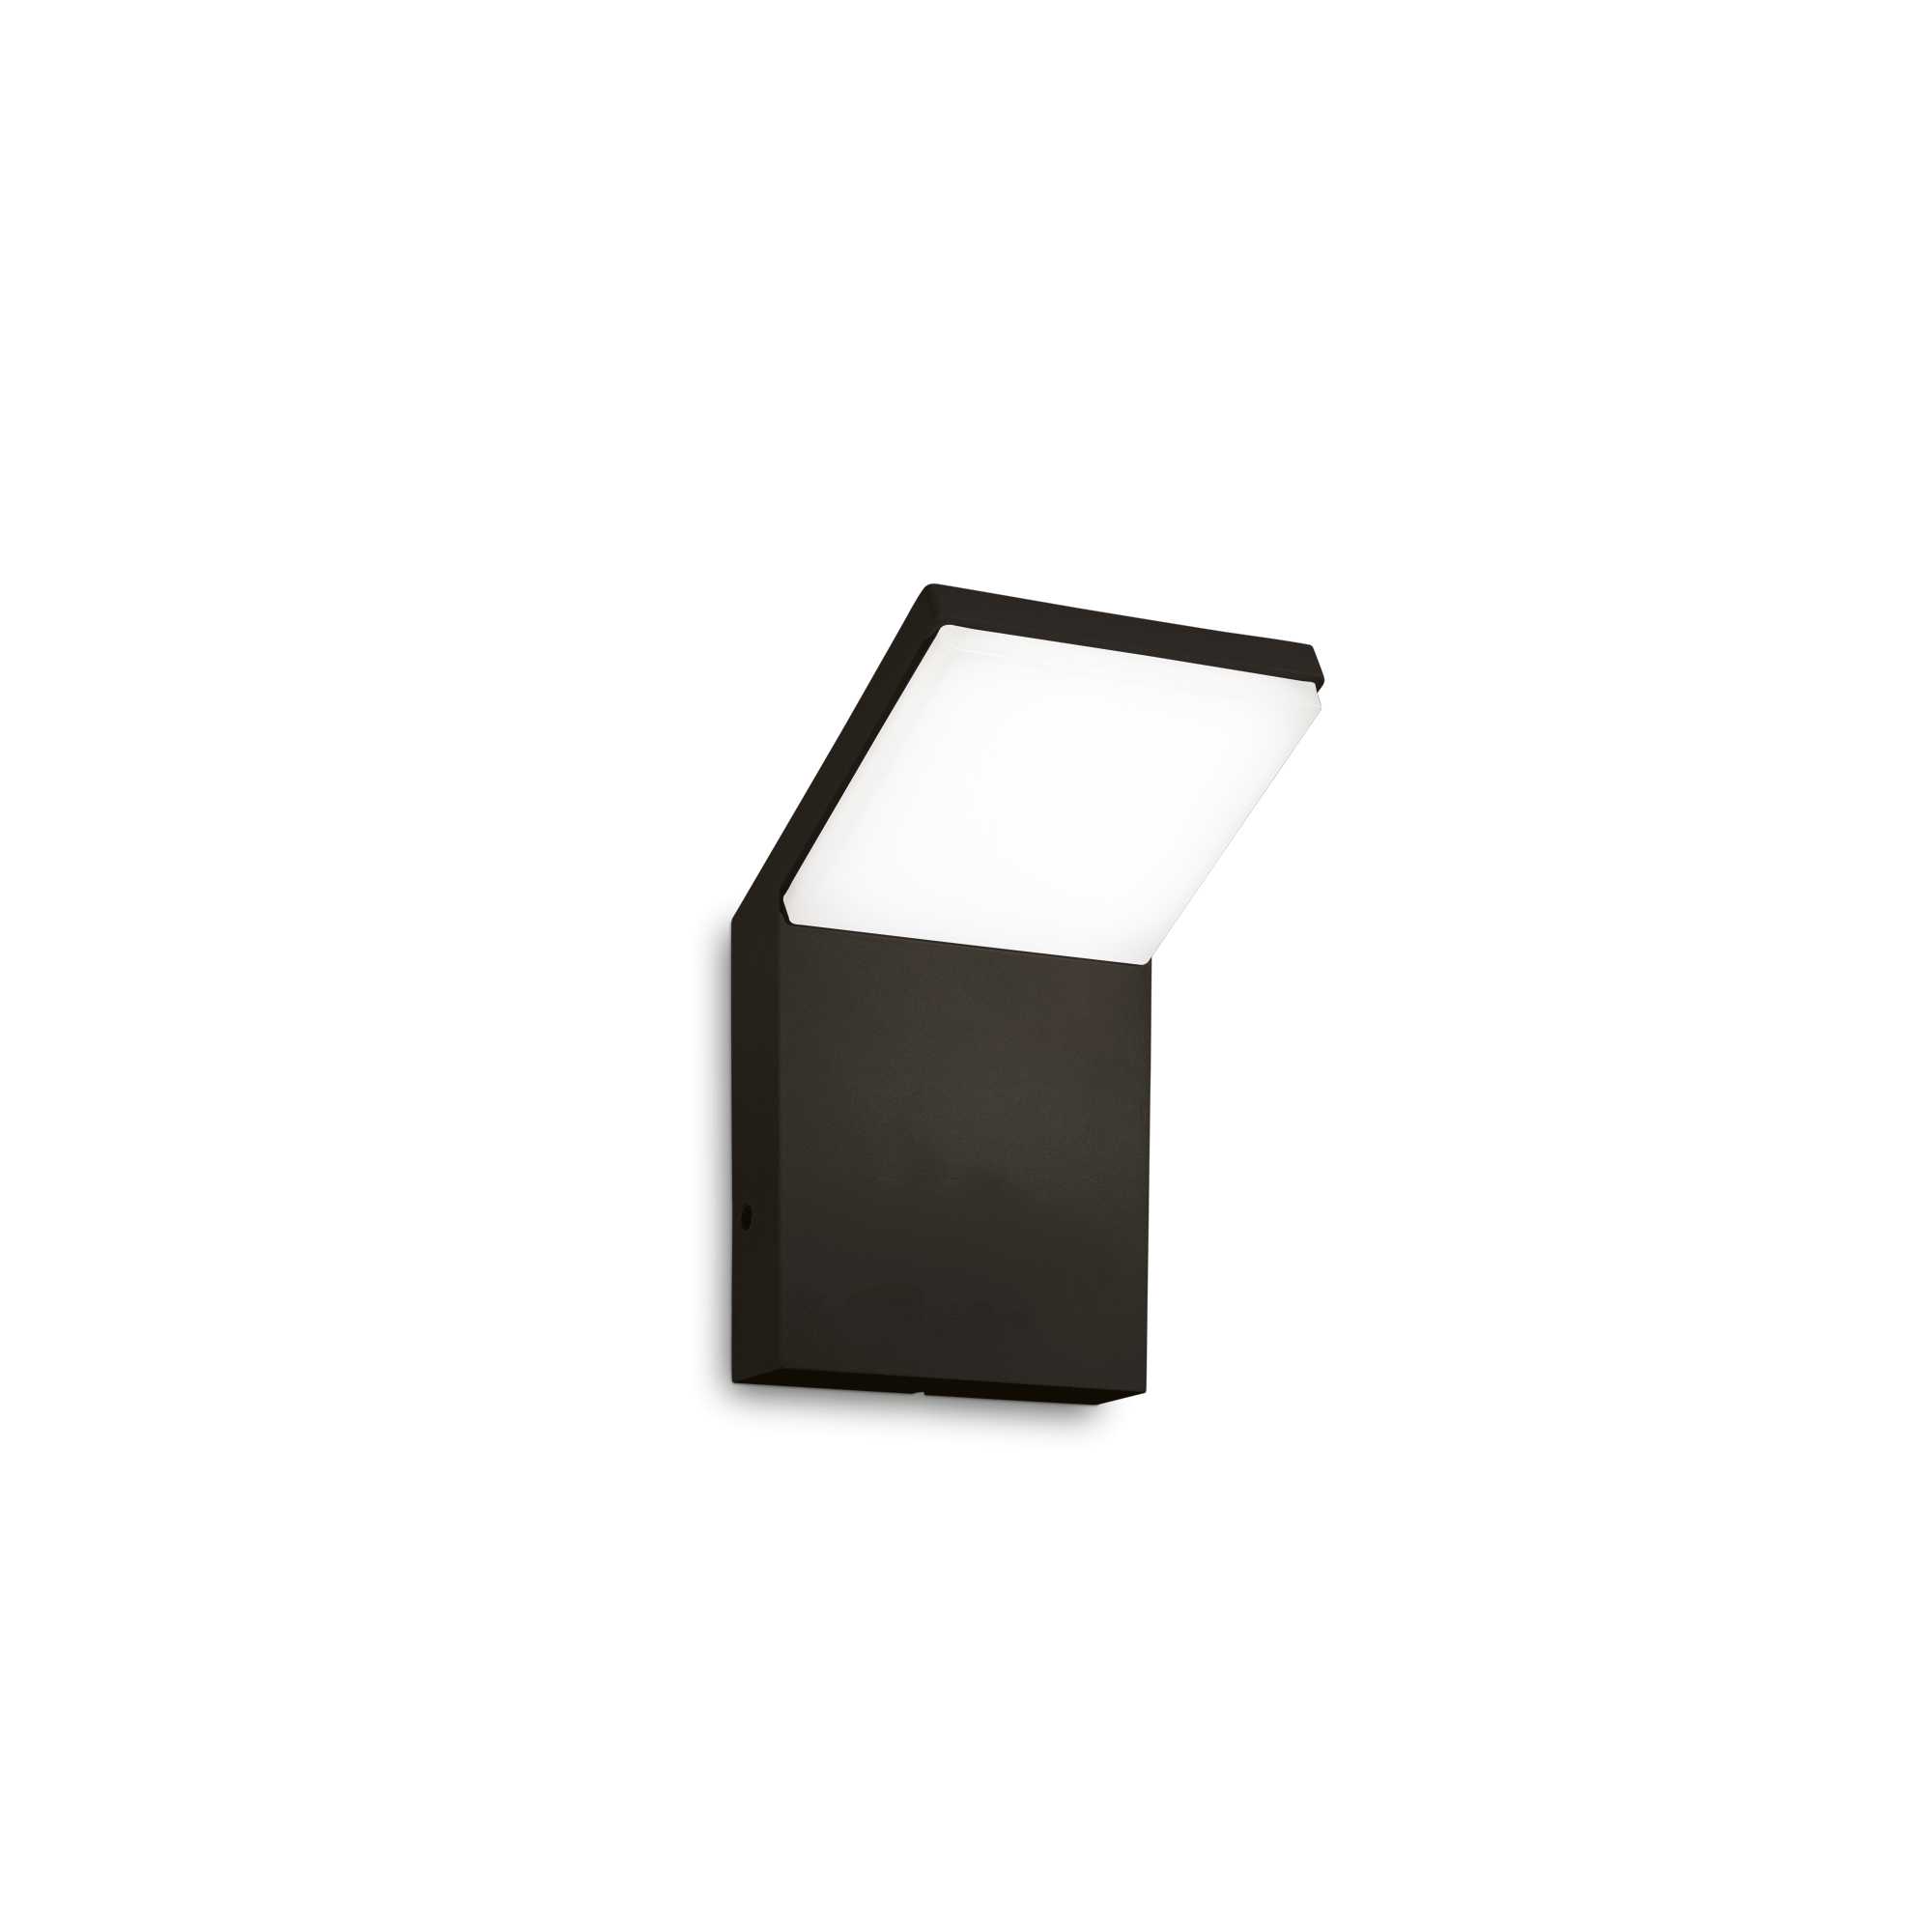 AD hotelska oprema Vanjska zidna lampa Style ap (4000k)- Crne boje slika proizvoda